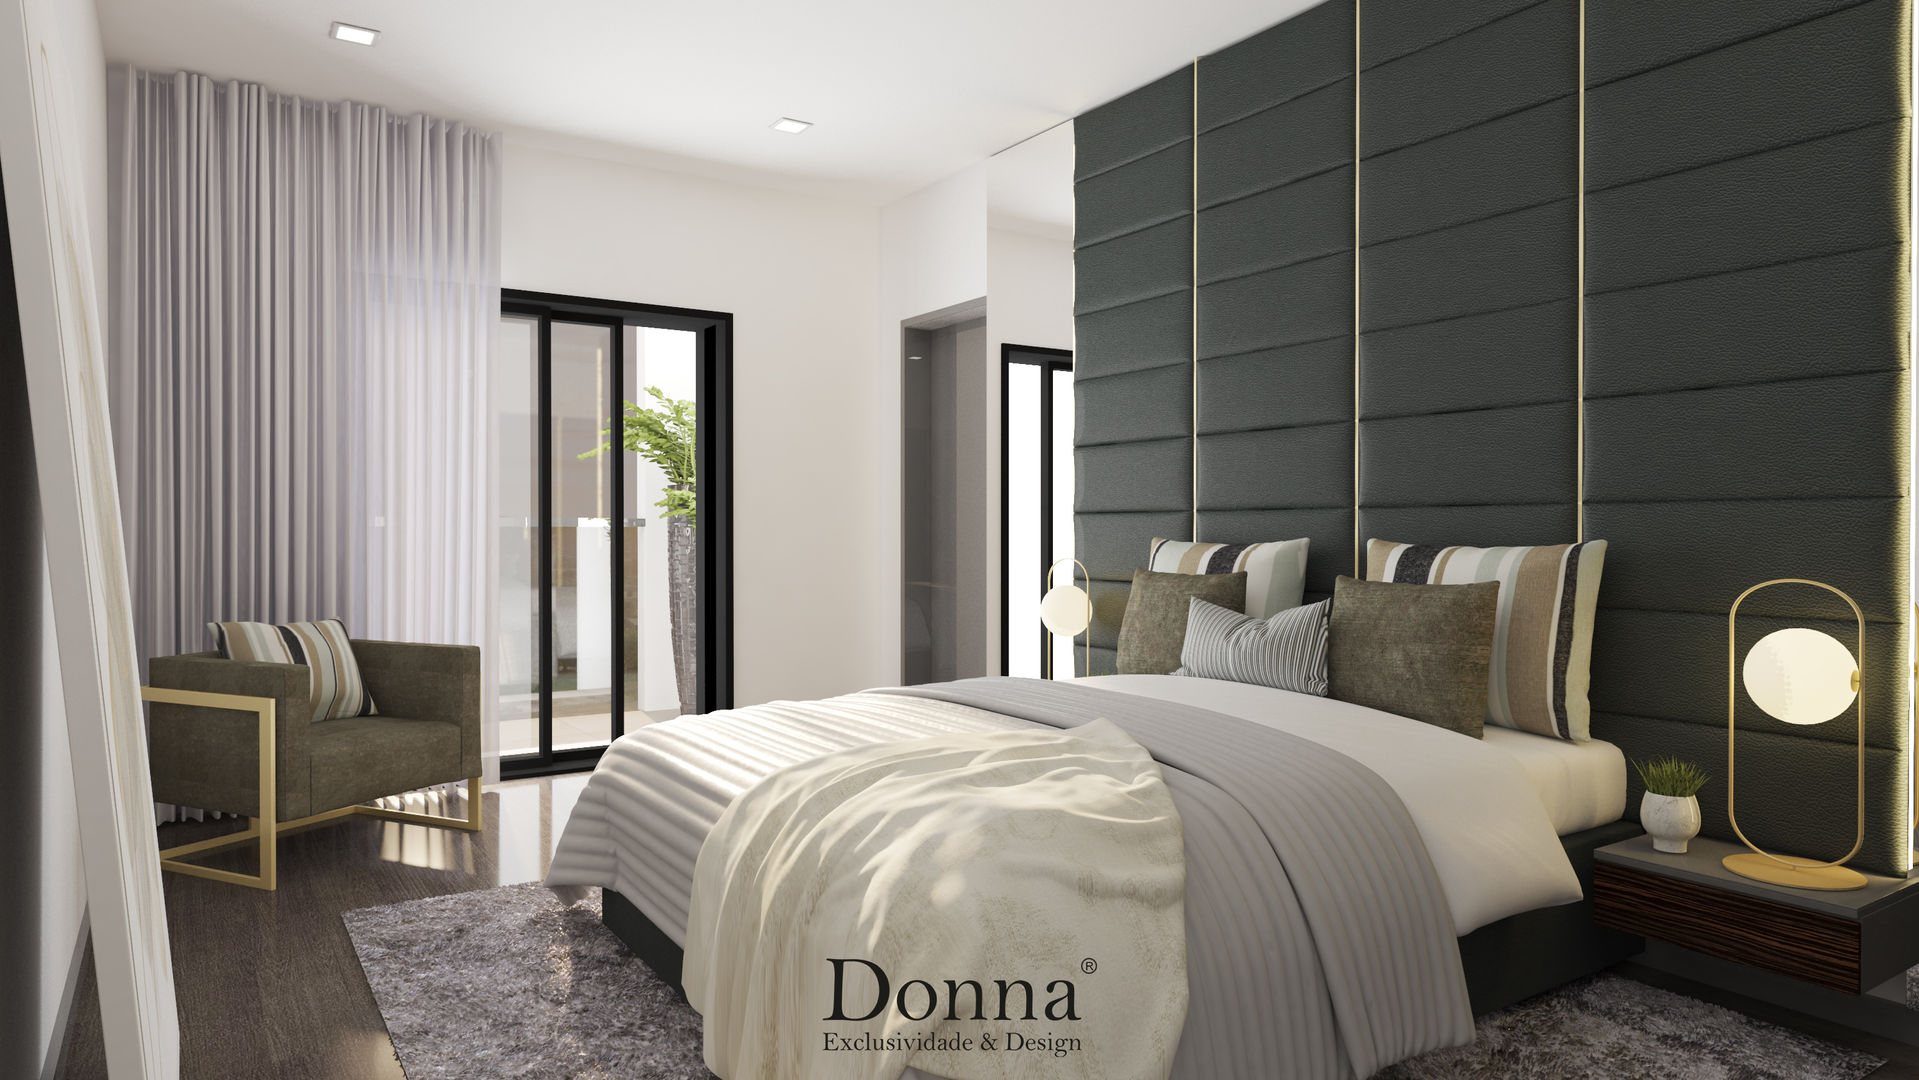 Projeto de Interiores 3D em Apartamento no Montijo , Donna - Exclusividade e Design Donna - Exclusividade e Design Dormitorios de estilo moderno